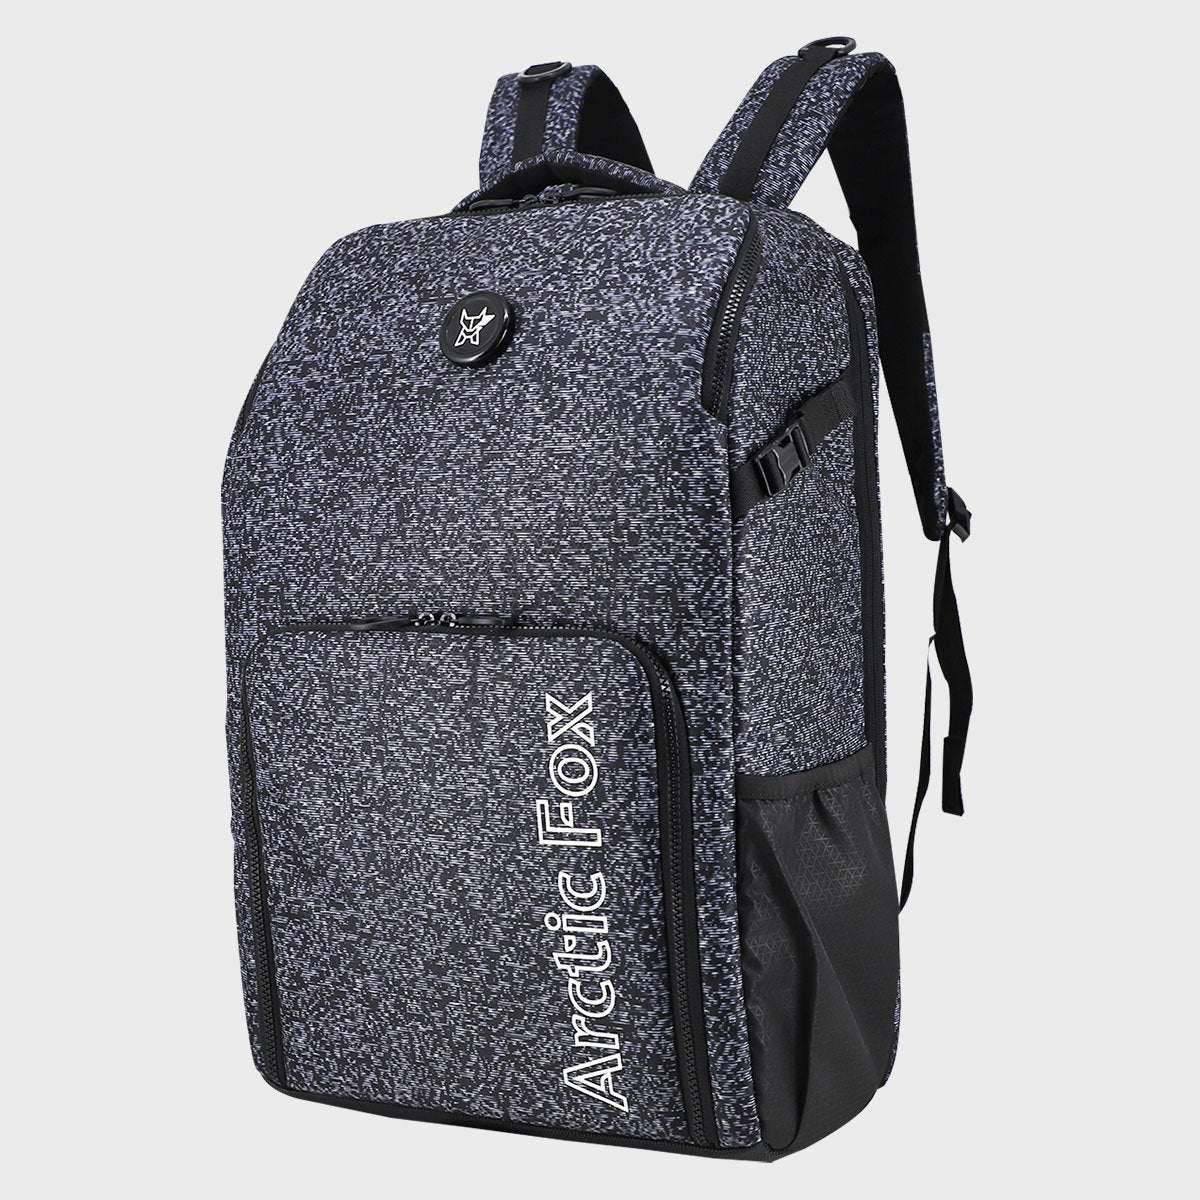 Buy Arctic Fox Polaroid Jet Black Professional Dslr Camera Bag and Backpack